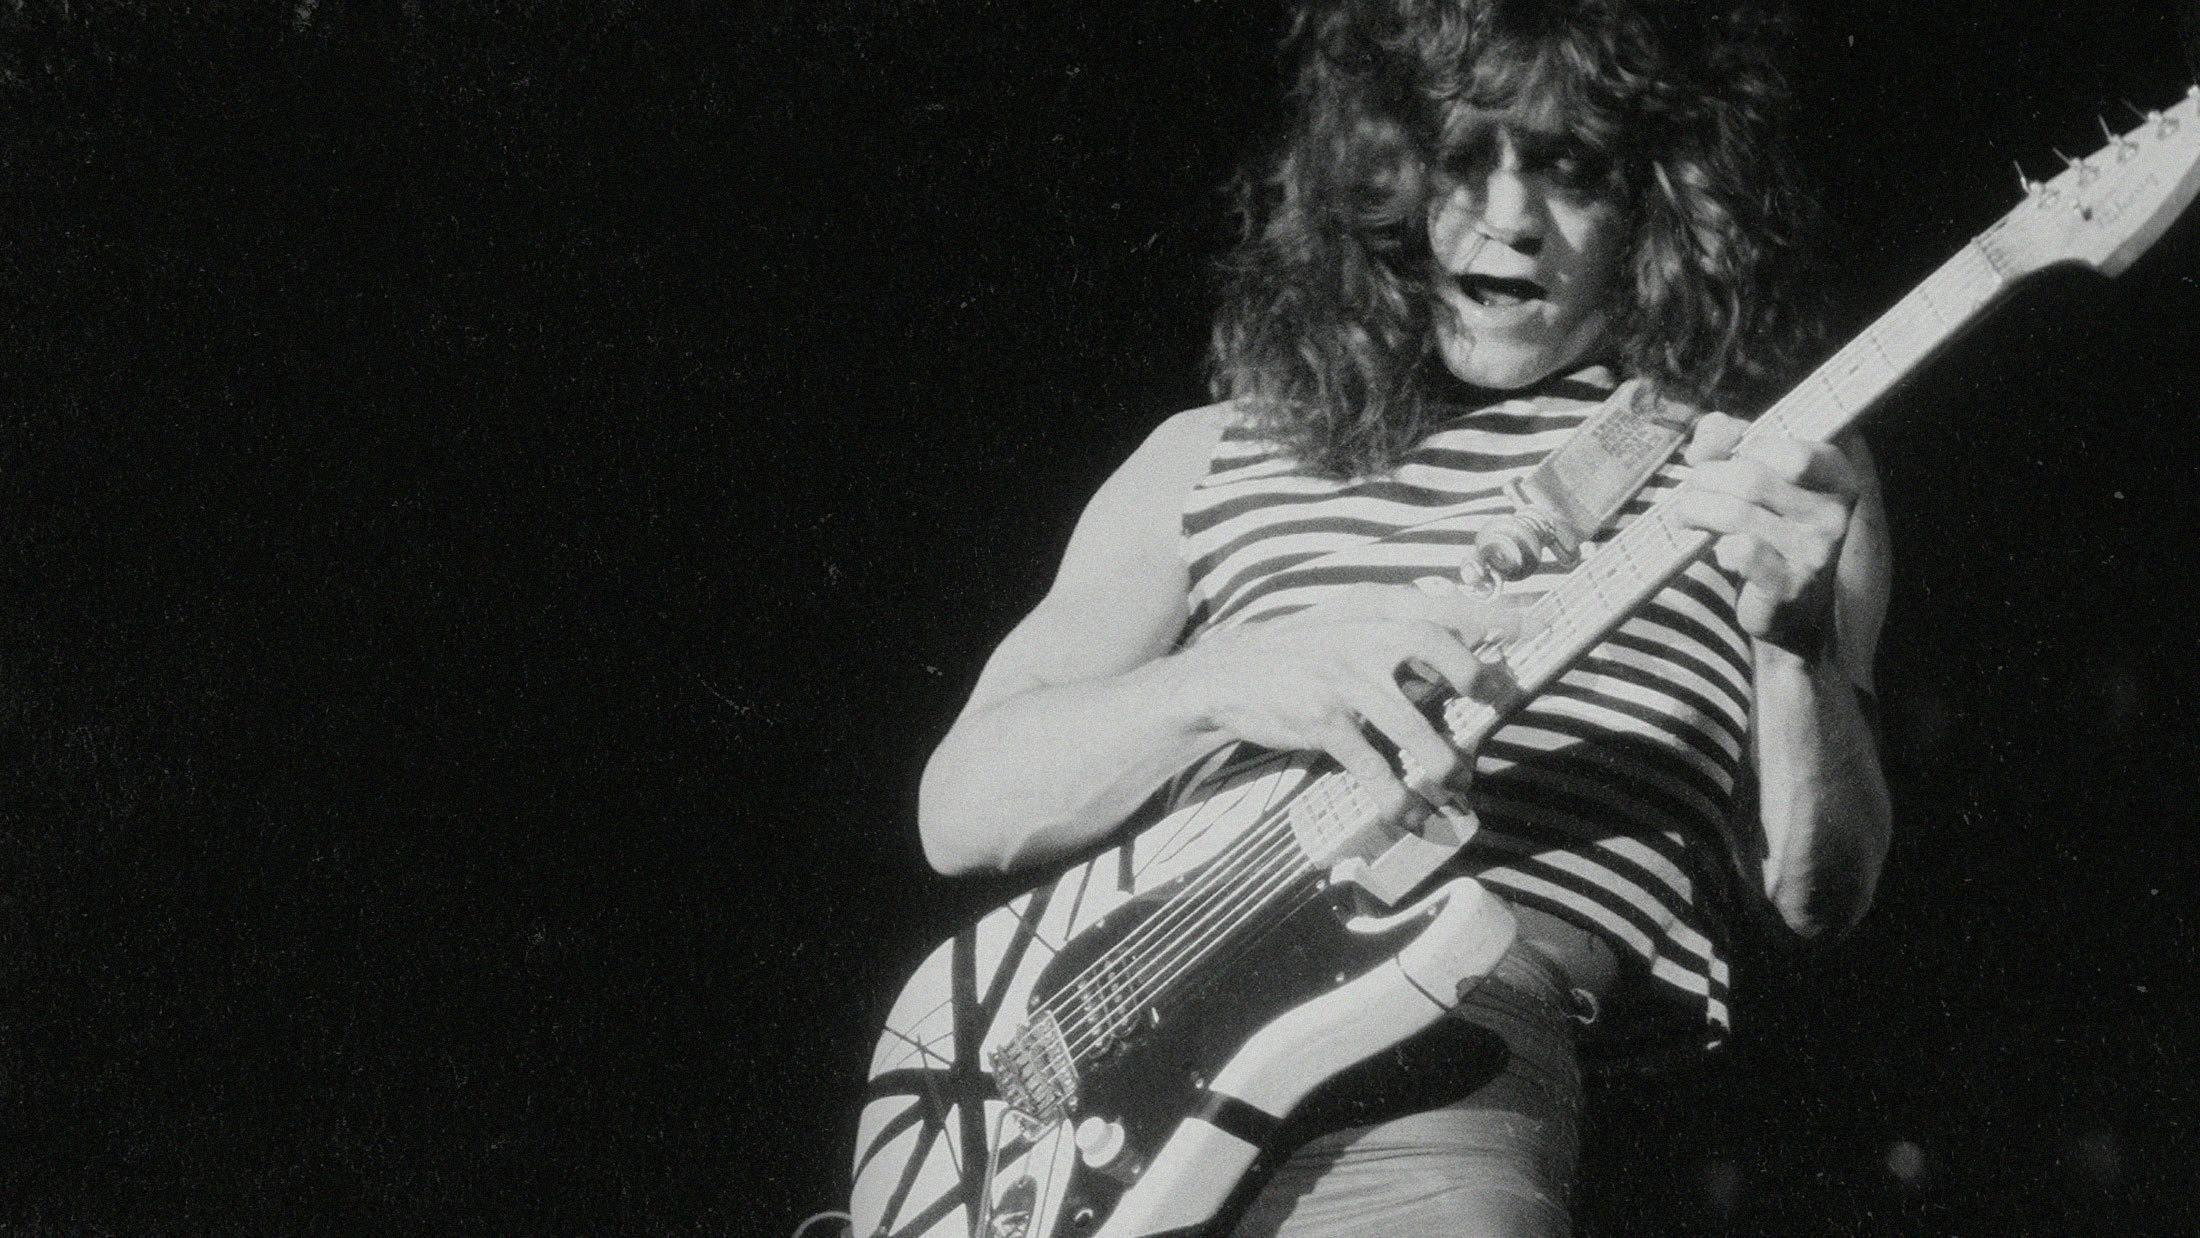 Remembering Eddie Van Halen: The guitarist who changed everything